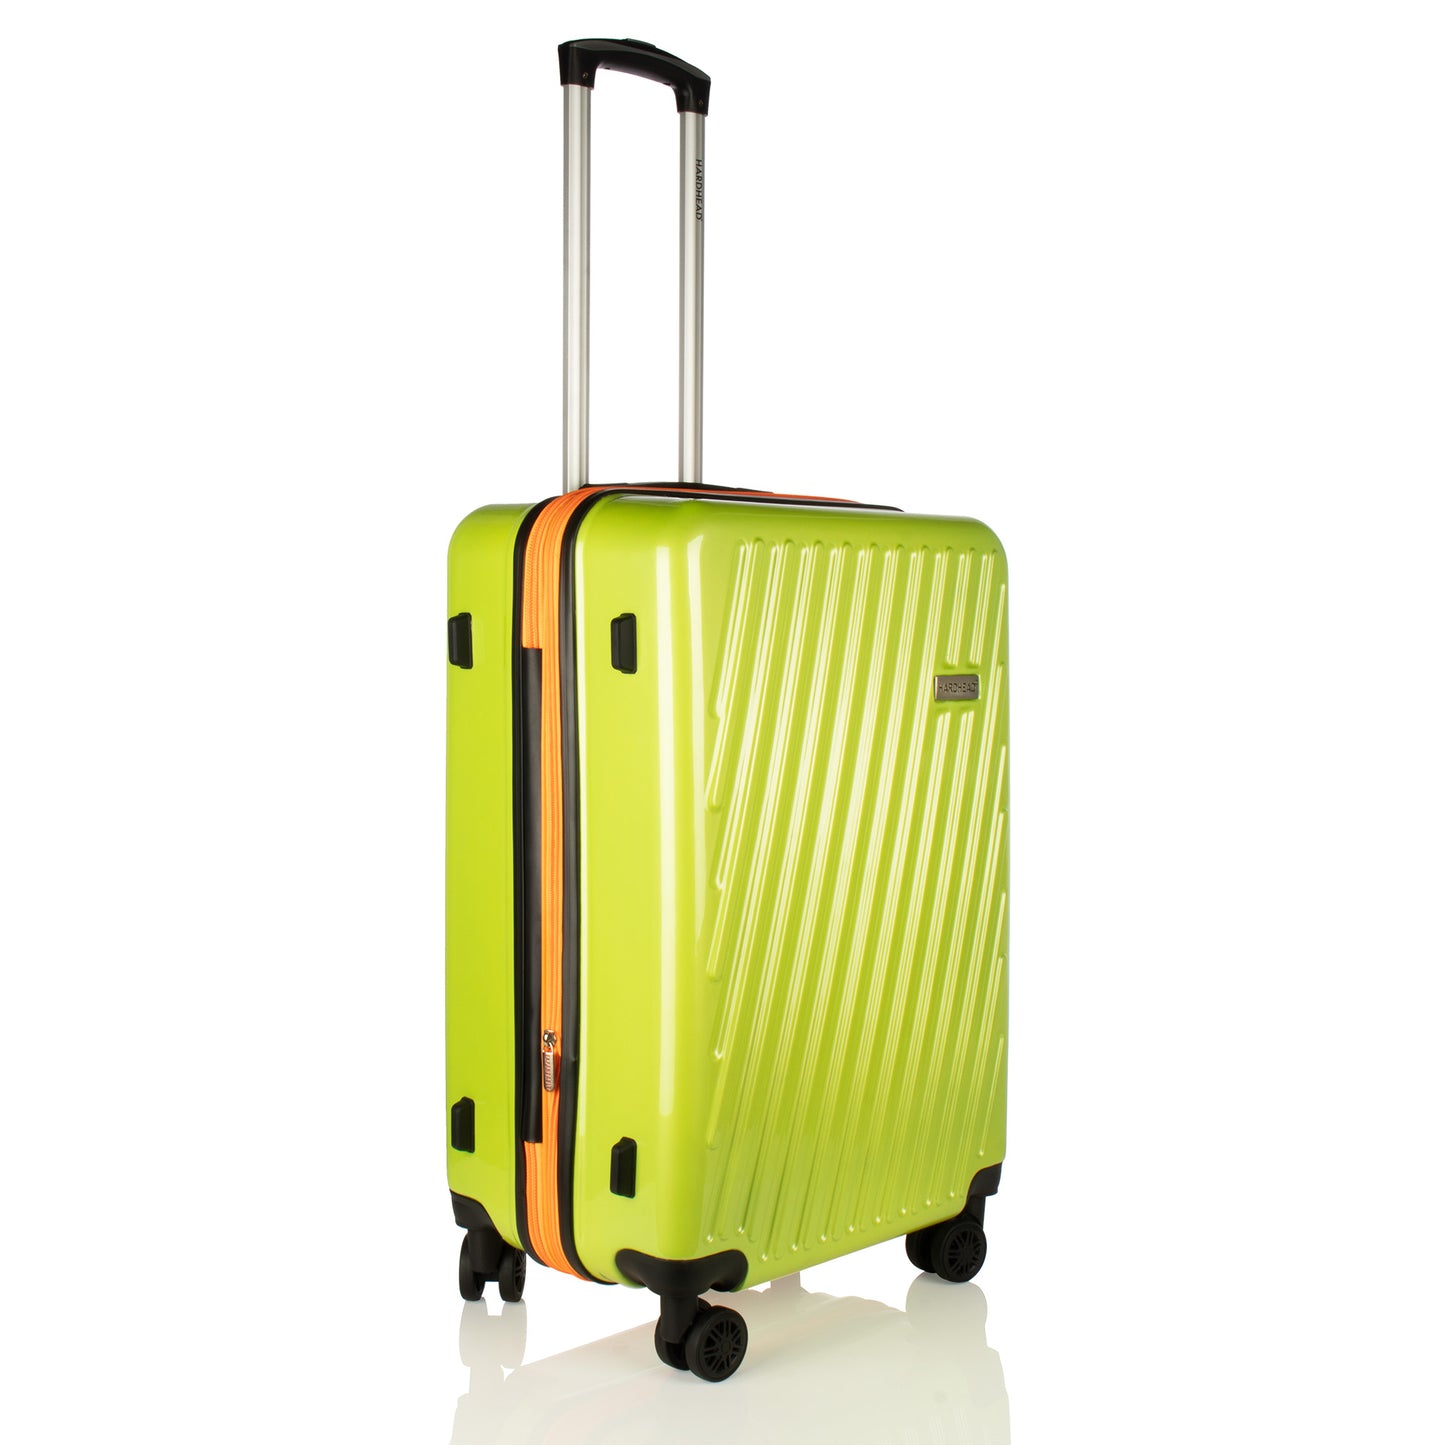 Hardhead Luggage (21/25/29") Suitcase Lock Spinner Hardshell Denisse Collection Green